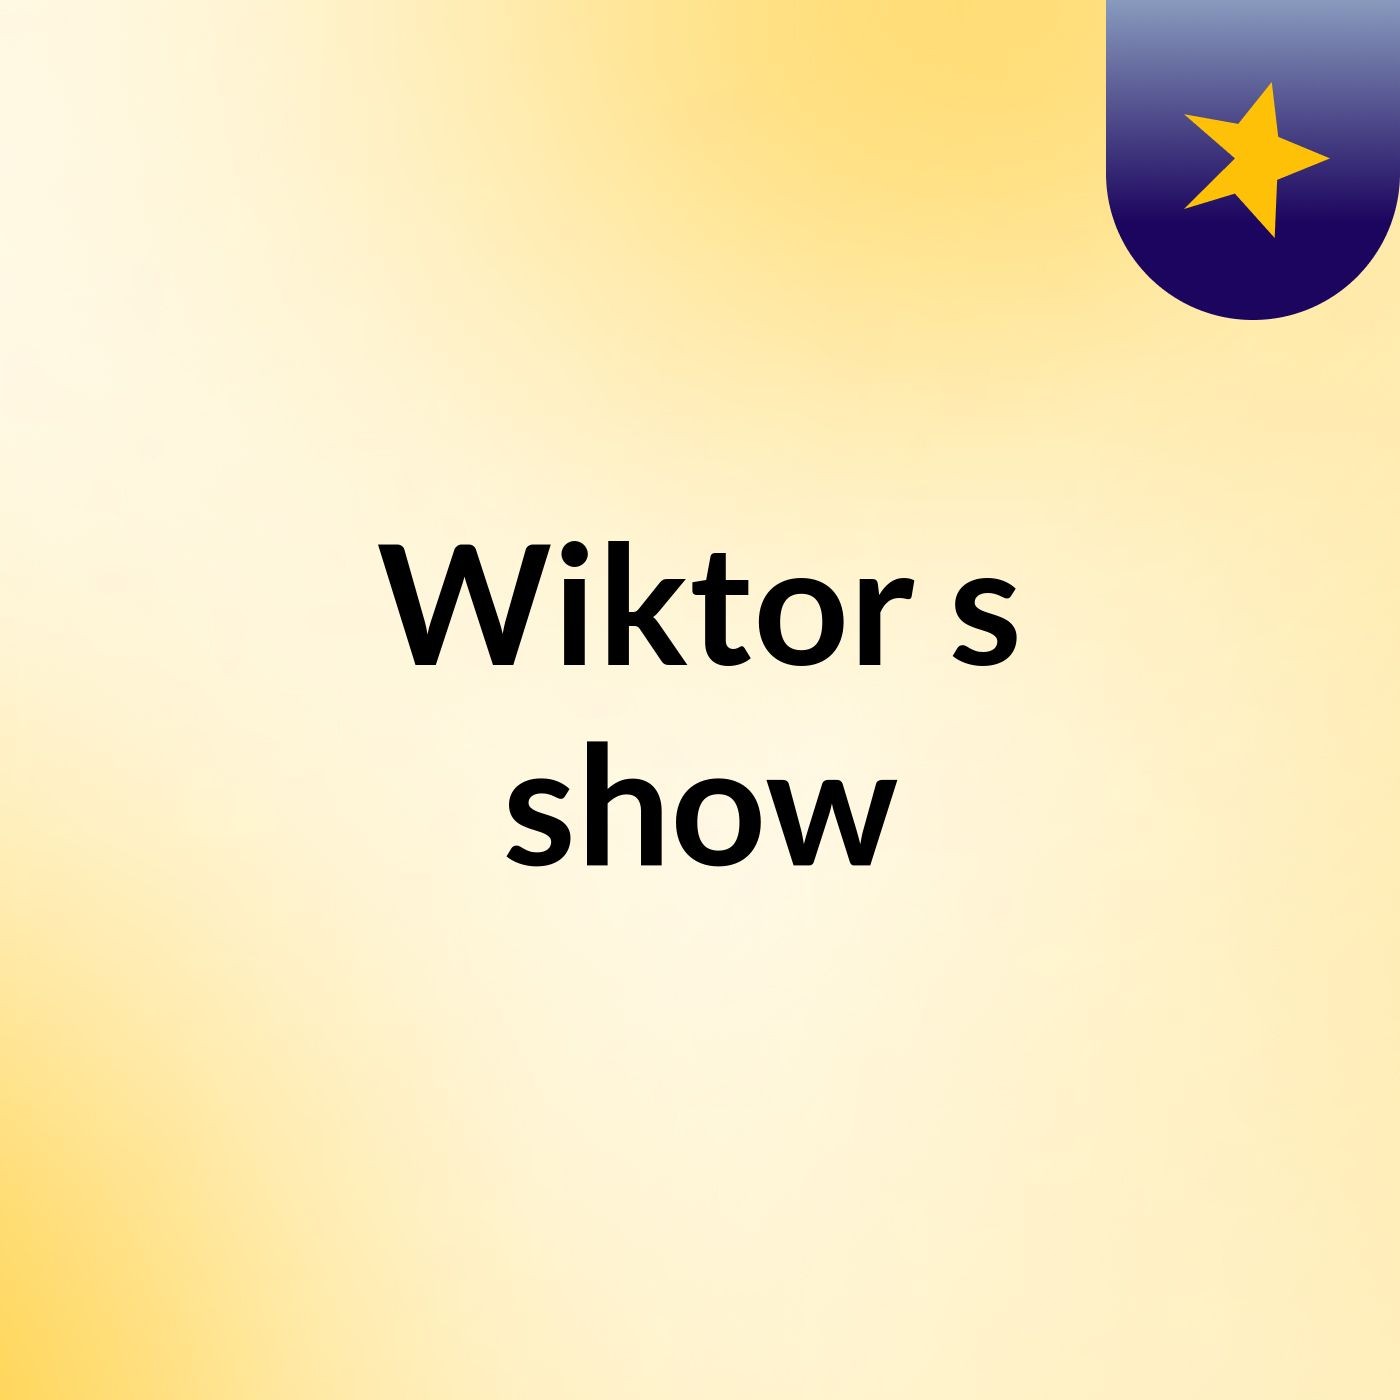 Wiktor's show